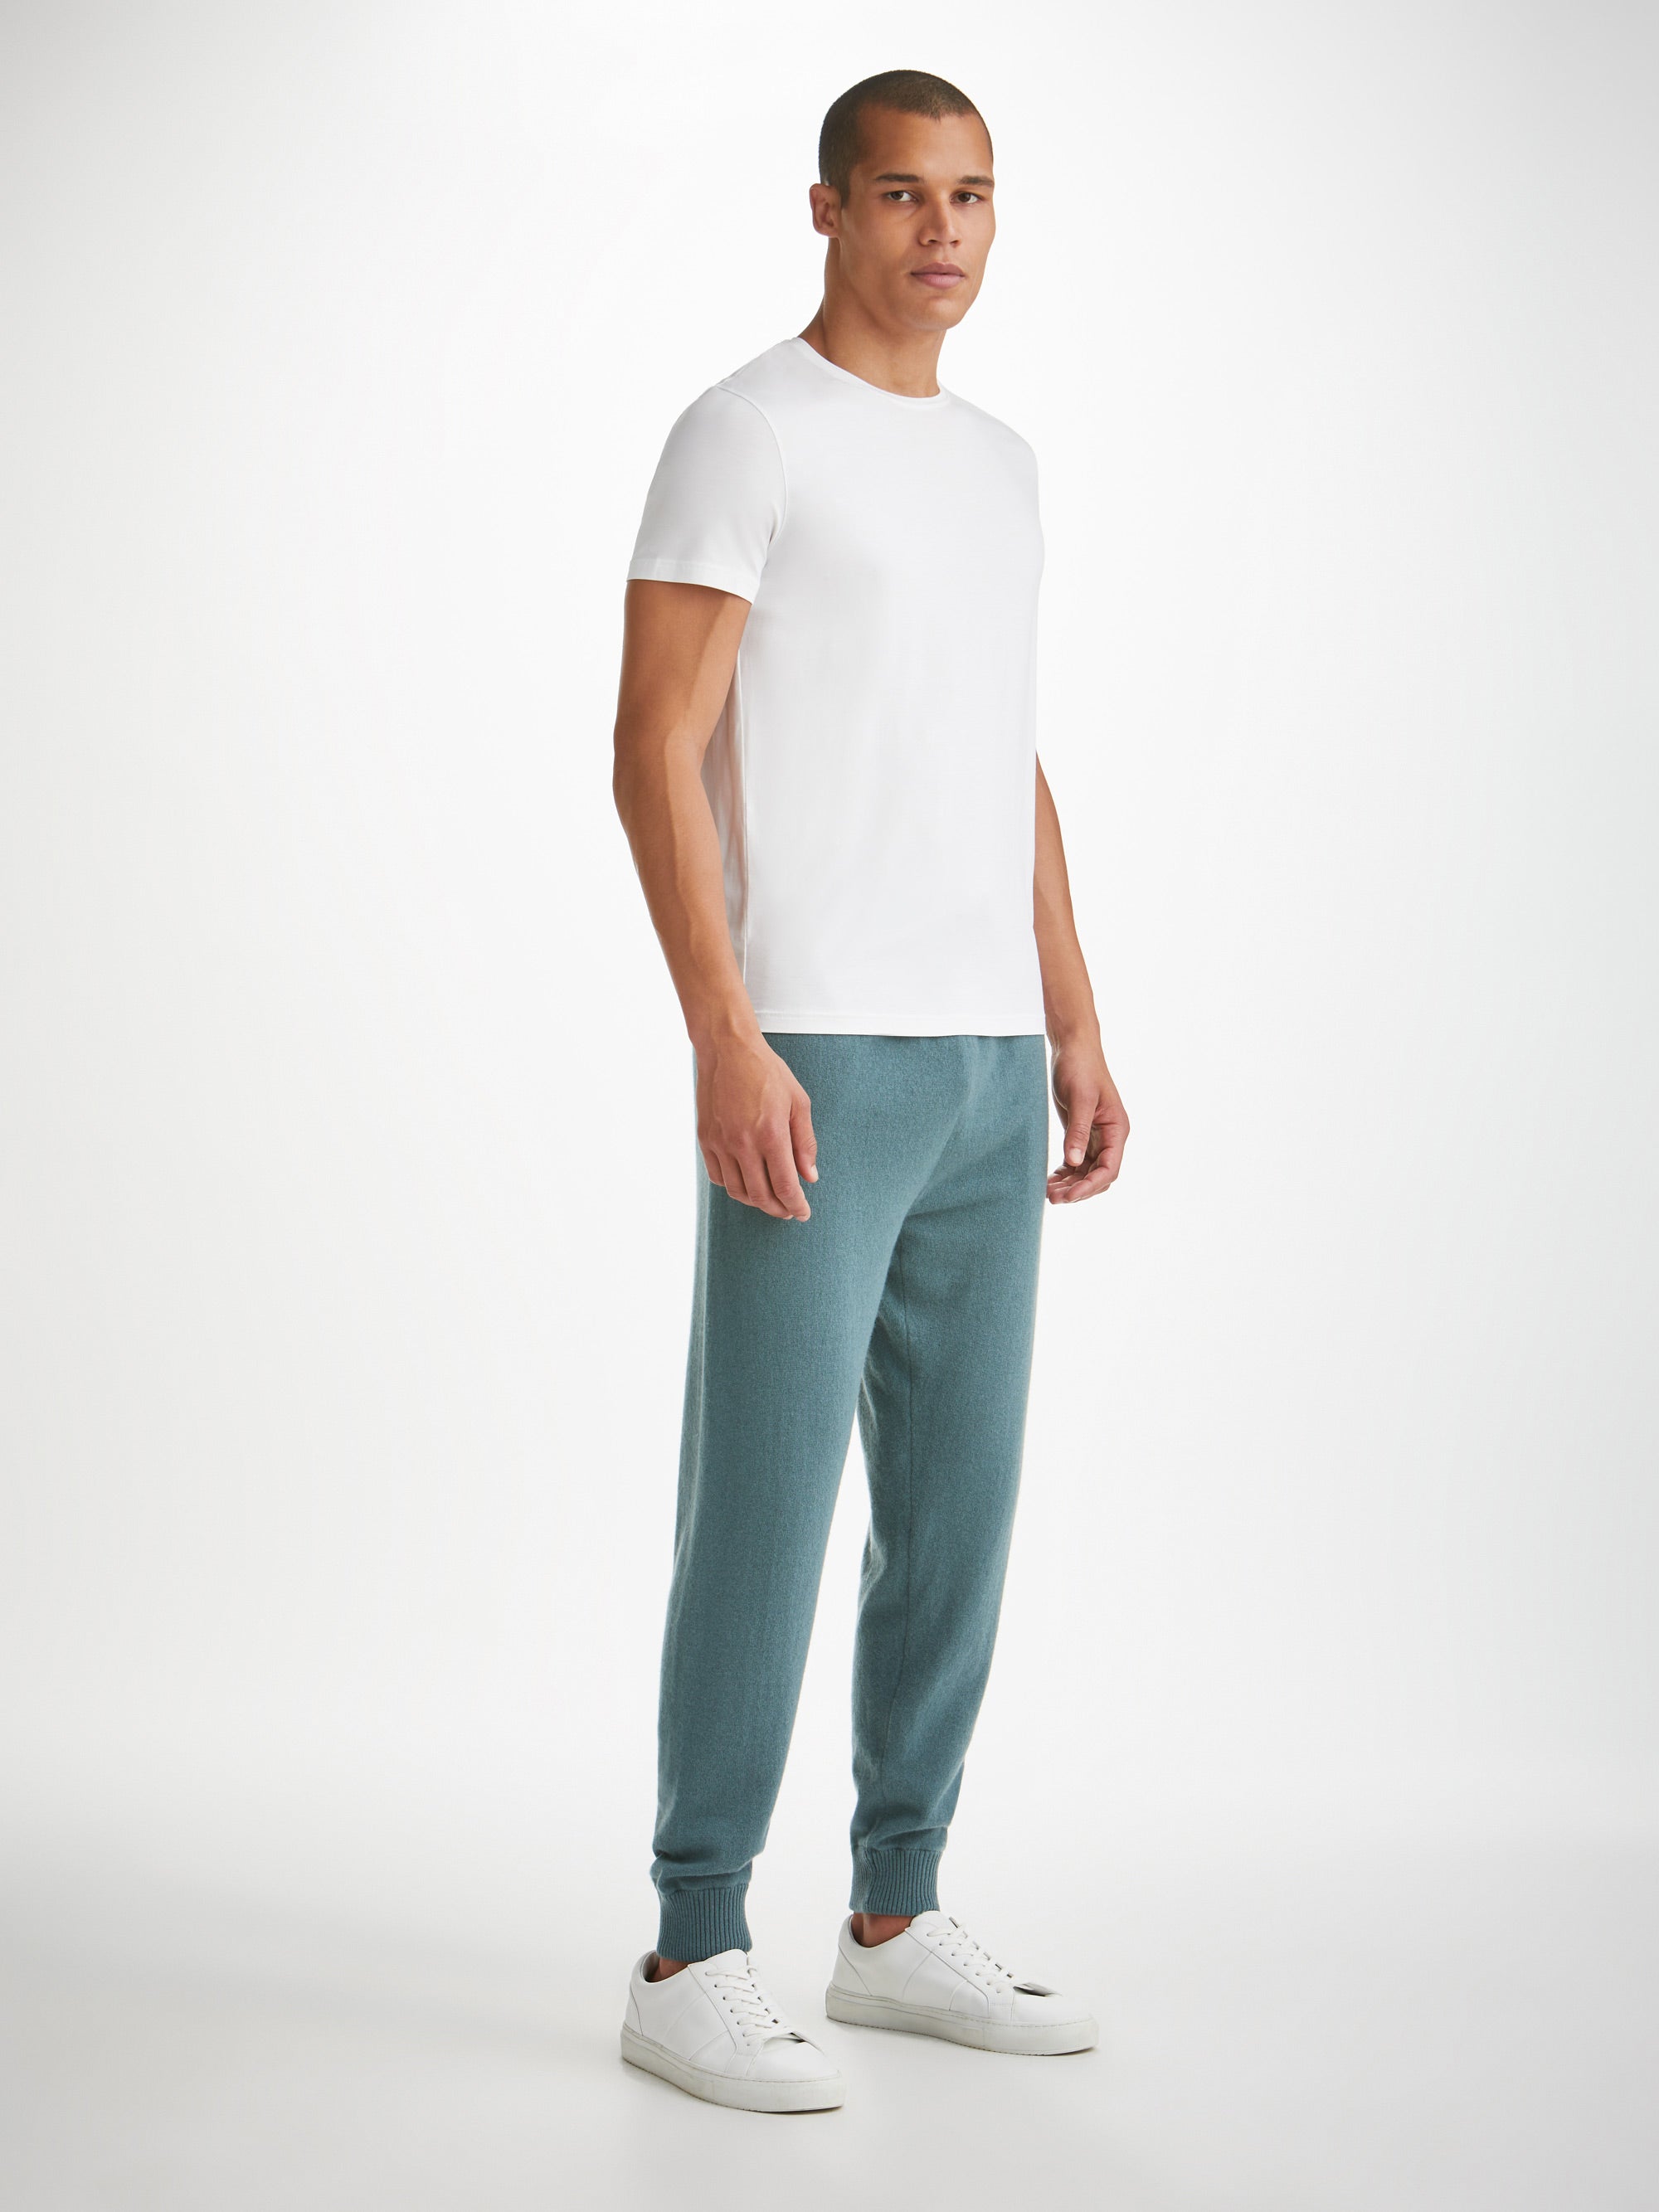 David Archy Cotton Men's Plain Moisture Wicking Sleepwear Pants Breathable  Soft Lounge Pants